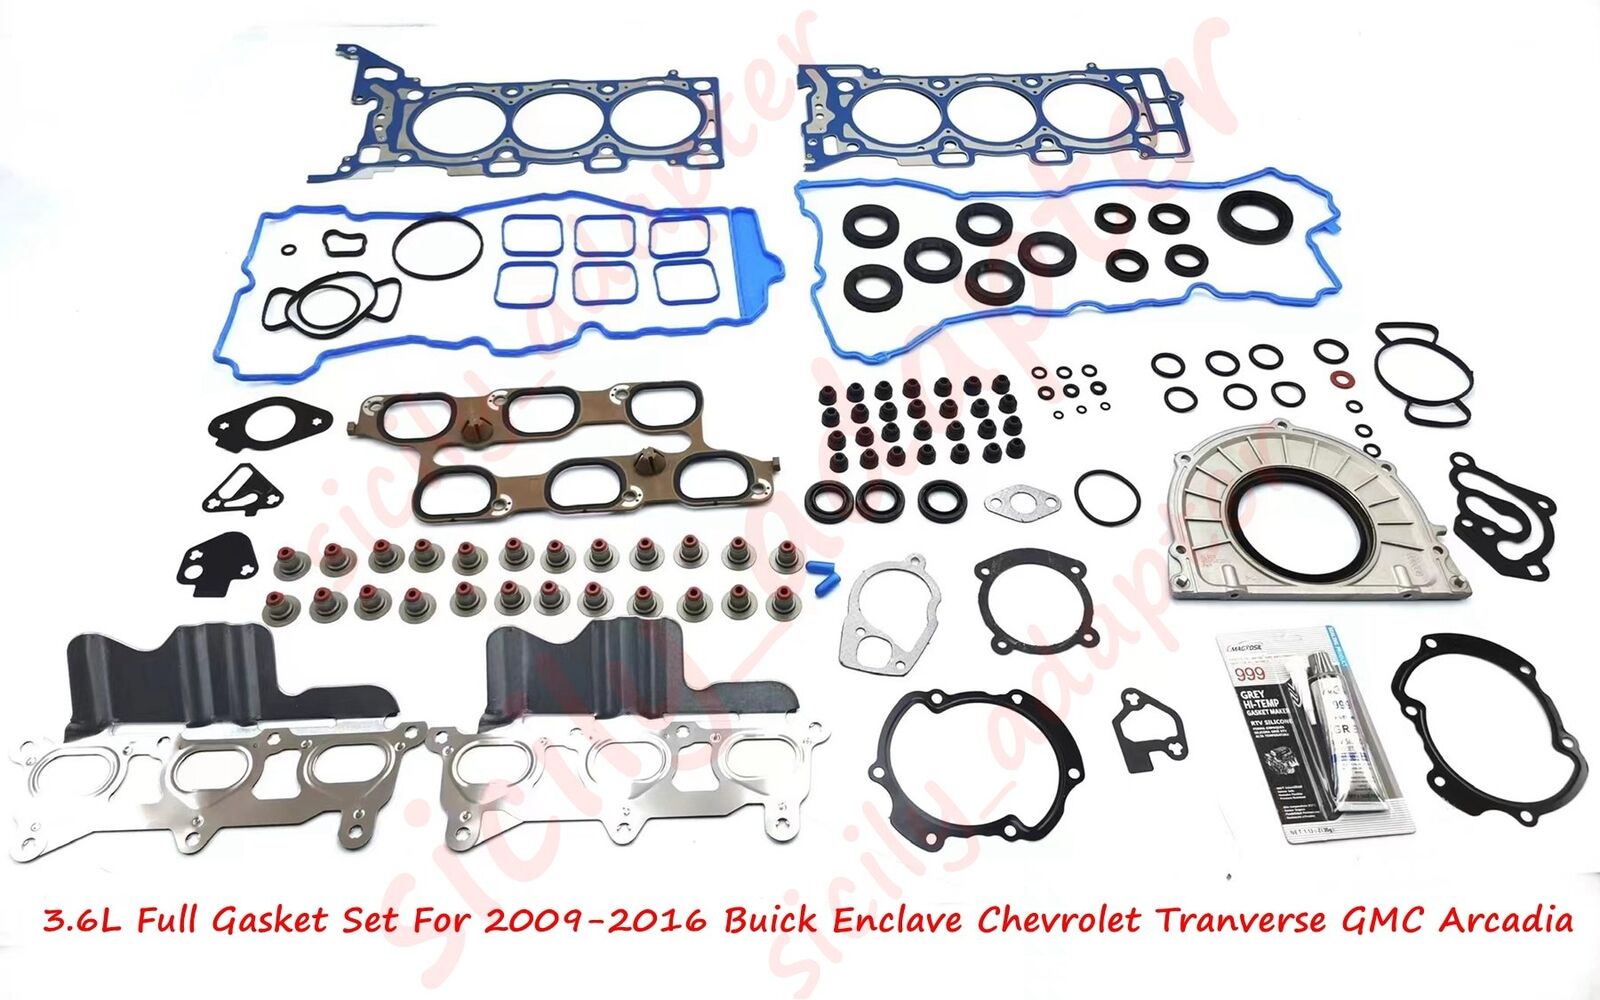 Full Gasket 3.6L Set For 2009-2016 Buick Enclave Chevrolet Tranverse GMC Arcadia